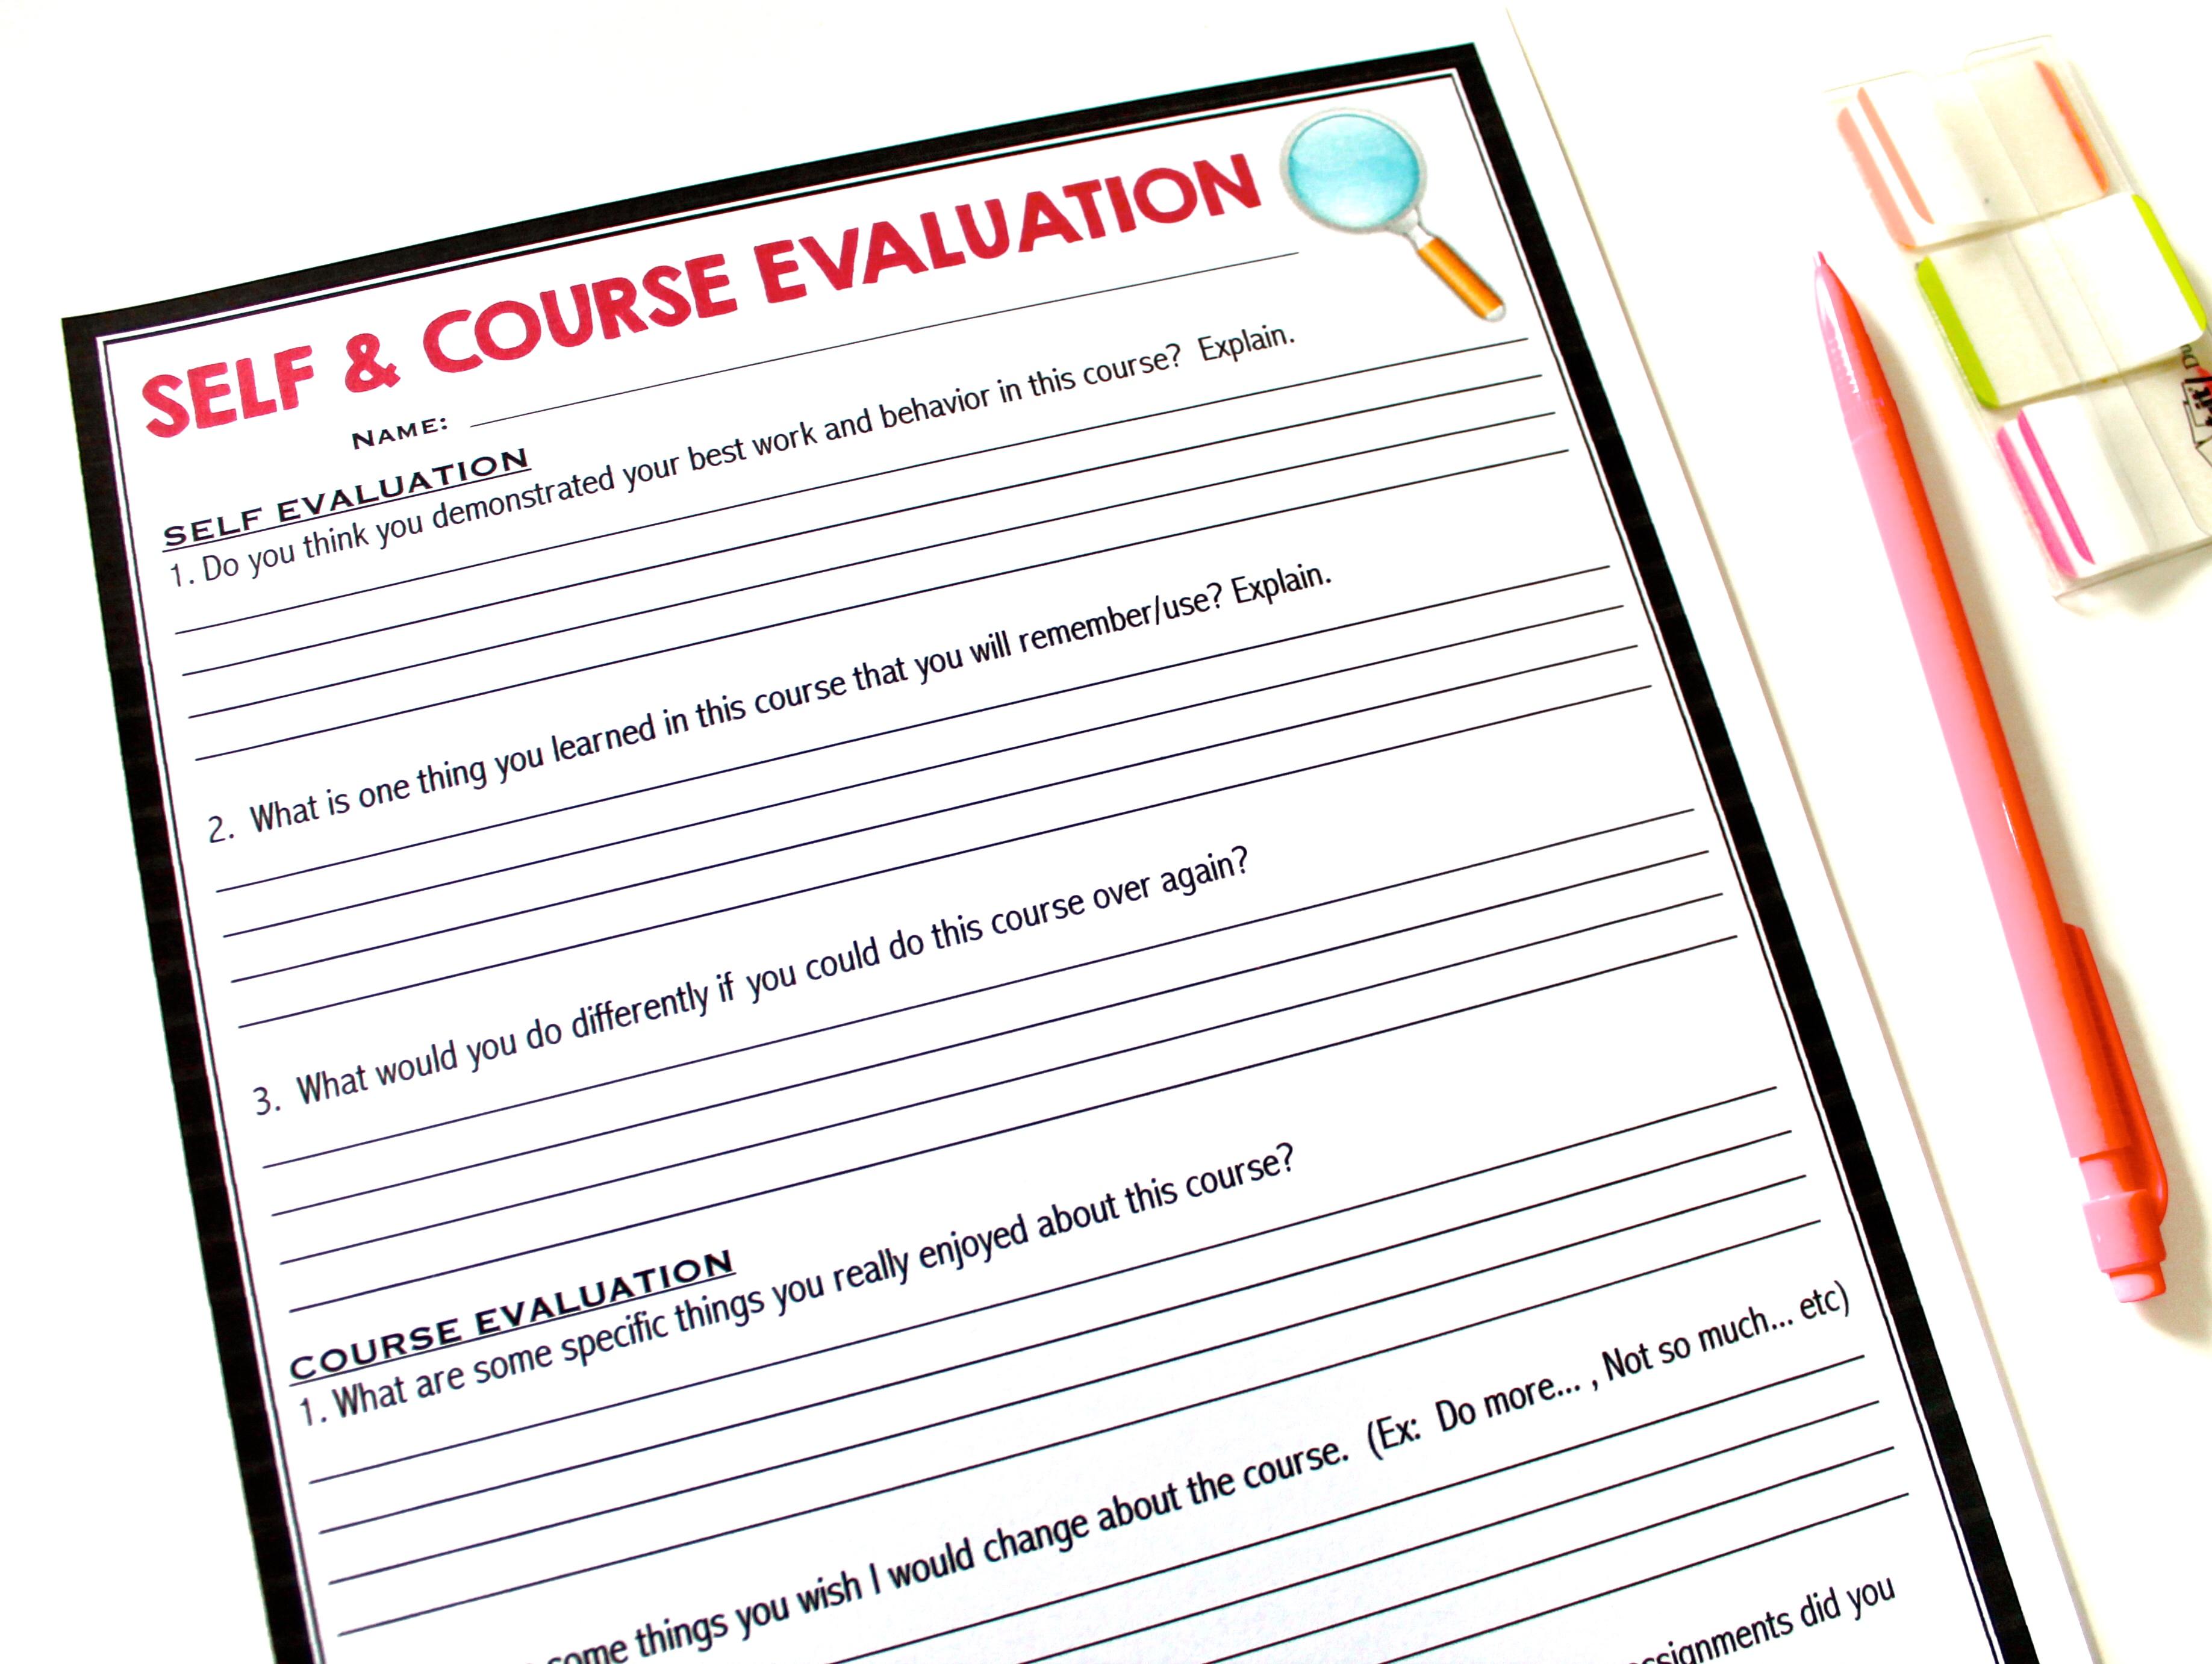 Course evaluation for ELA